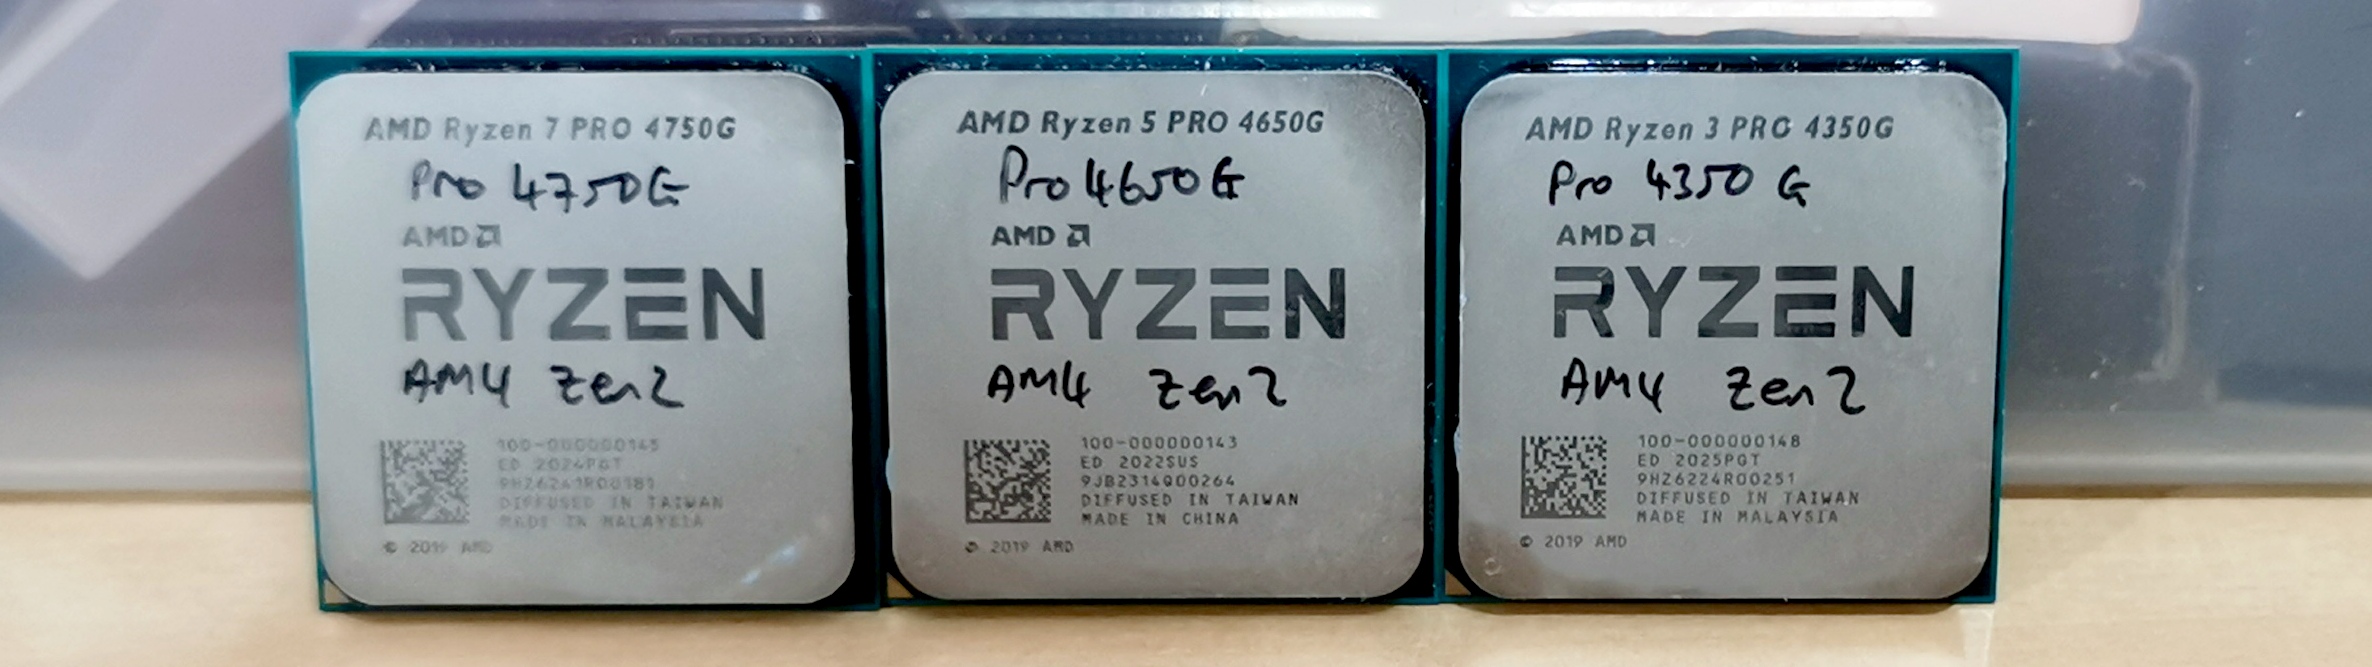 3 pro 4350g. Ryzen™ 5 4600g. Процессор AMD Ryzen 5 4600g. AMD Ryzen 5 4600g сокет. AMD 4350g.